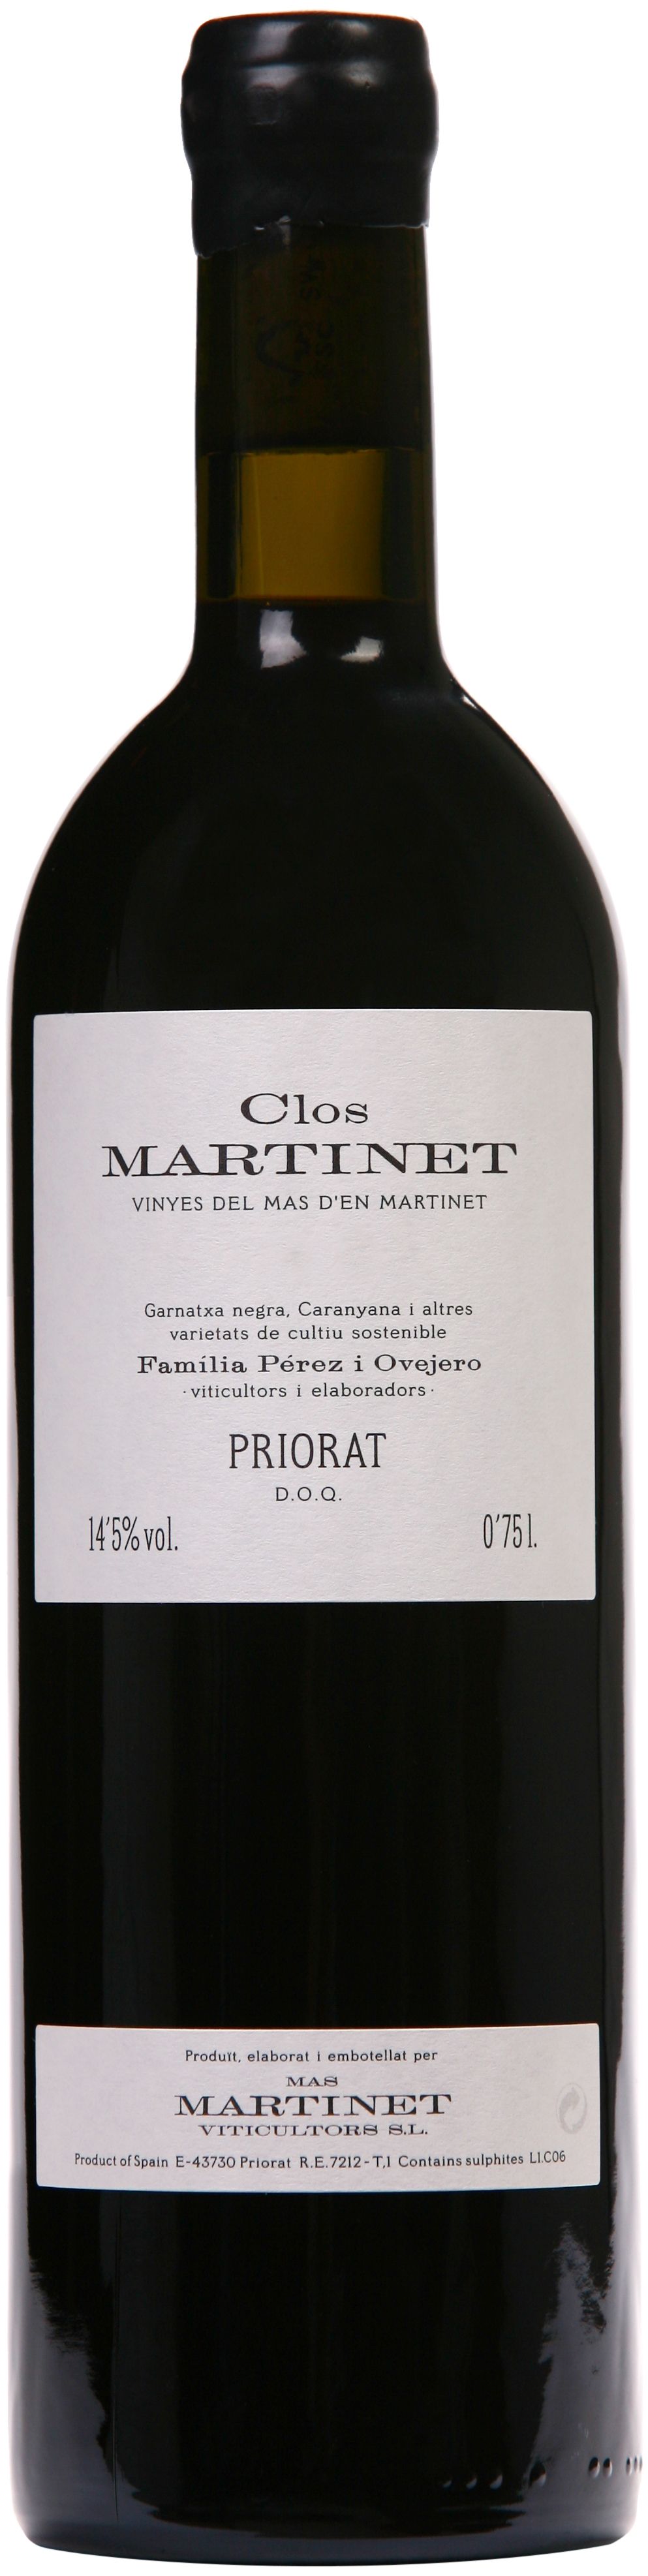 Mas Martinet, Clos Martinet, 2010